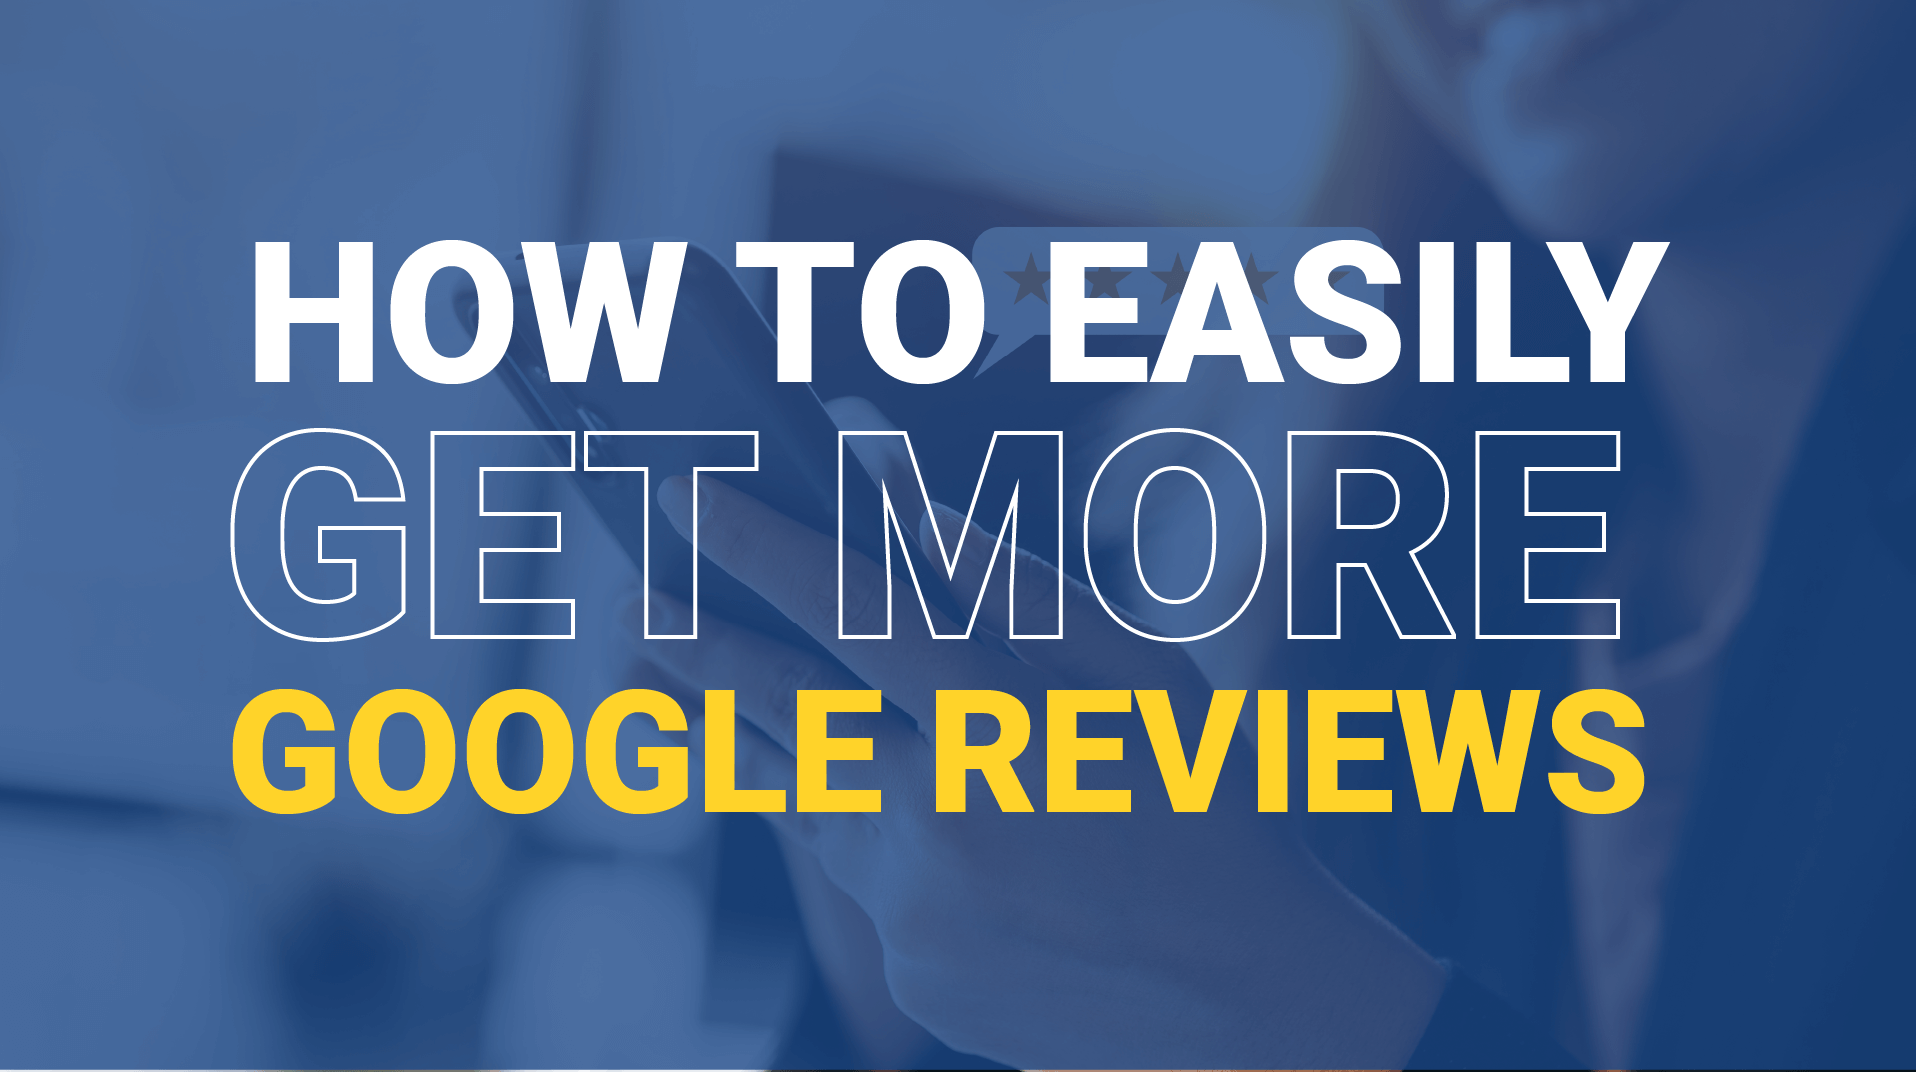 How to Easily Get More Google Reviews?